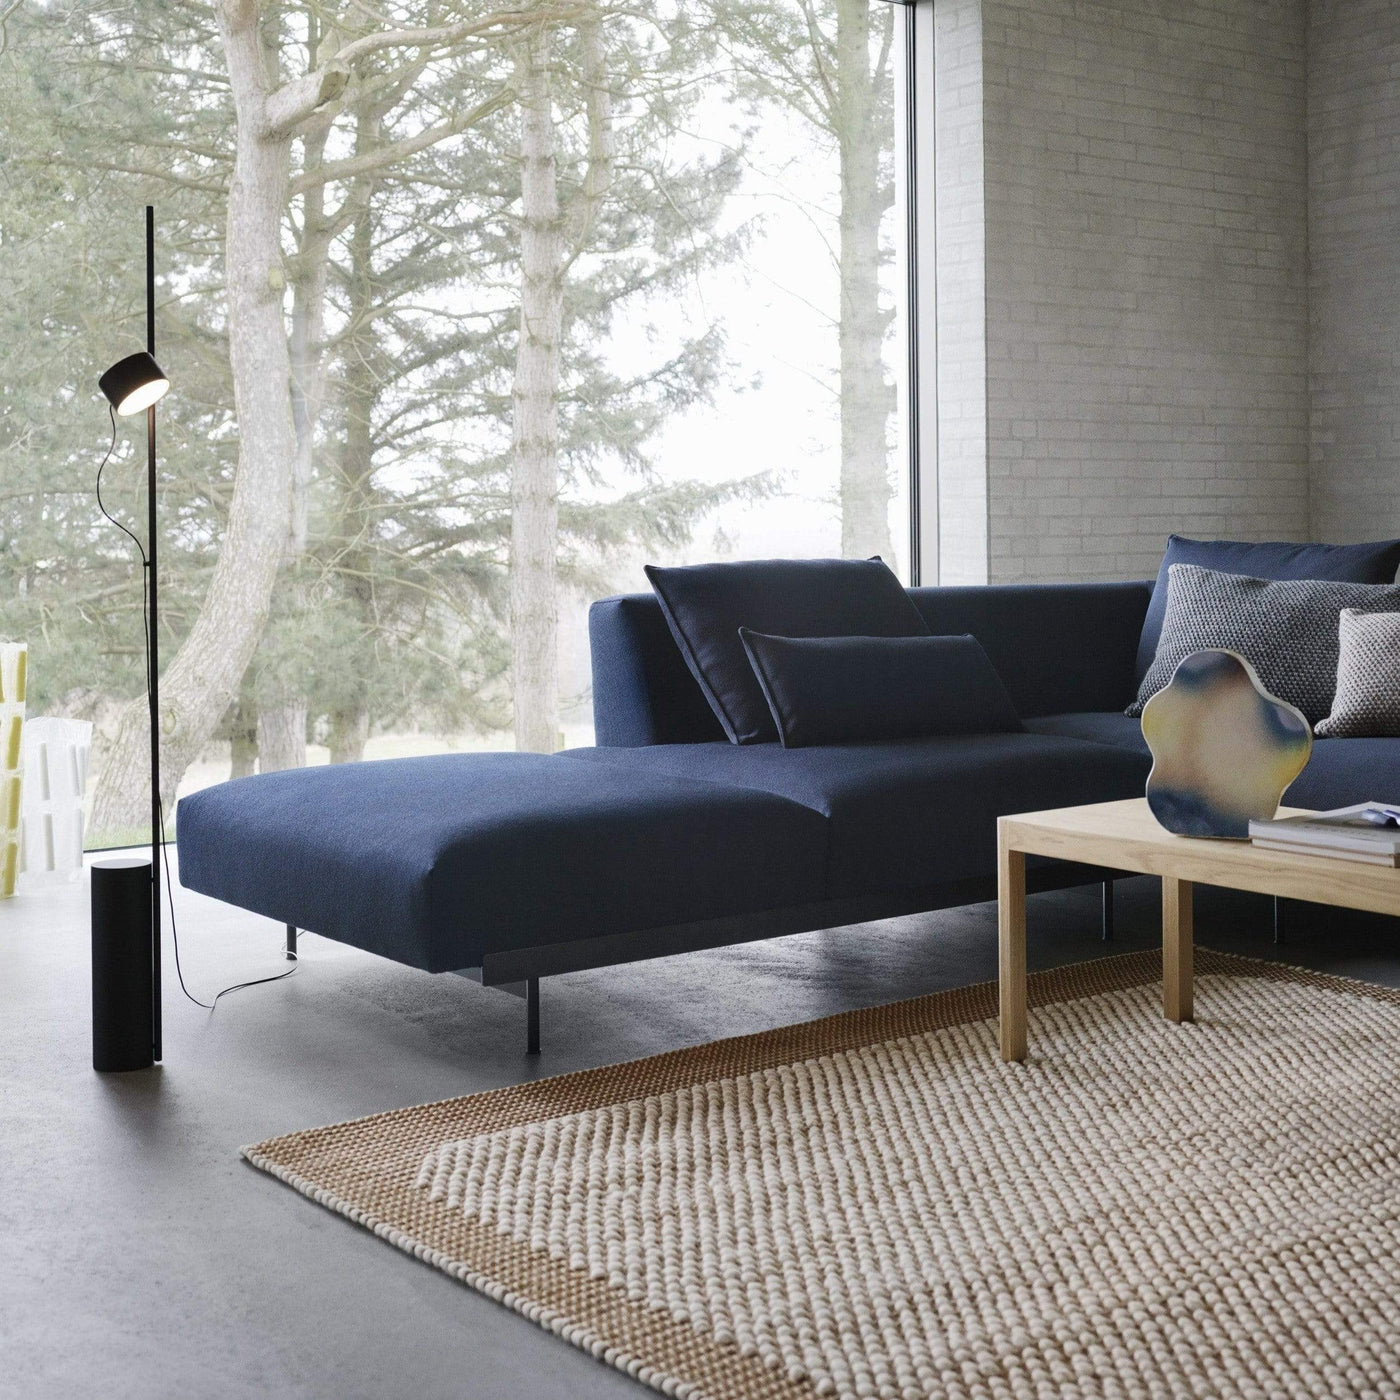 Muuto In Situ Corner Sofa in configuration 2, Vidar 554 fabric, available from someday designs. #colour_vidar-554